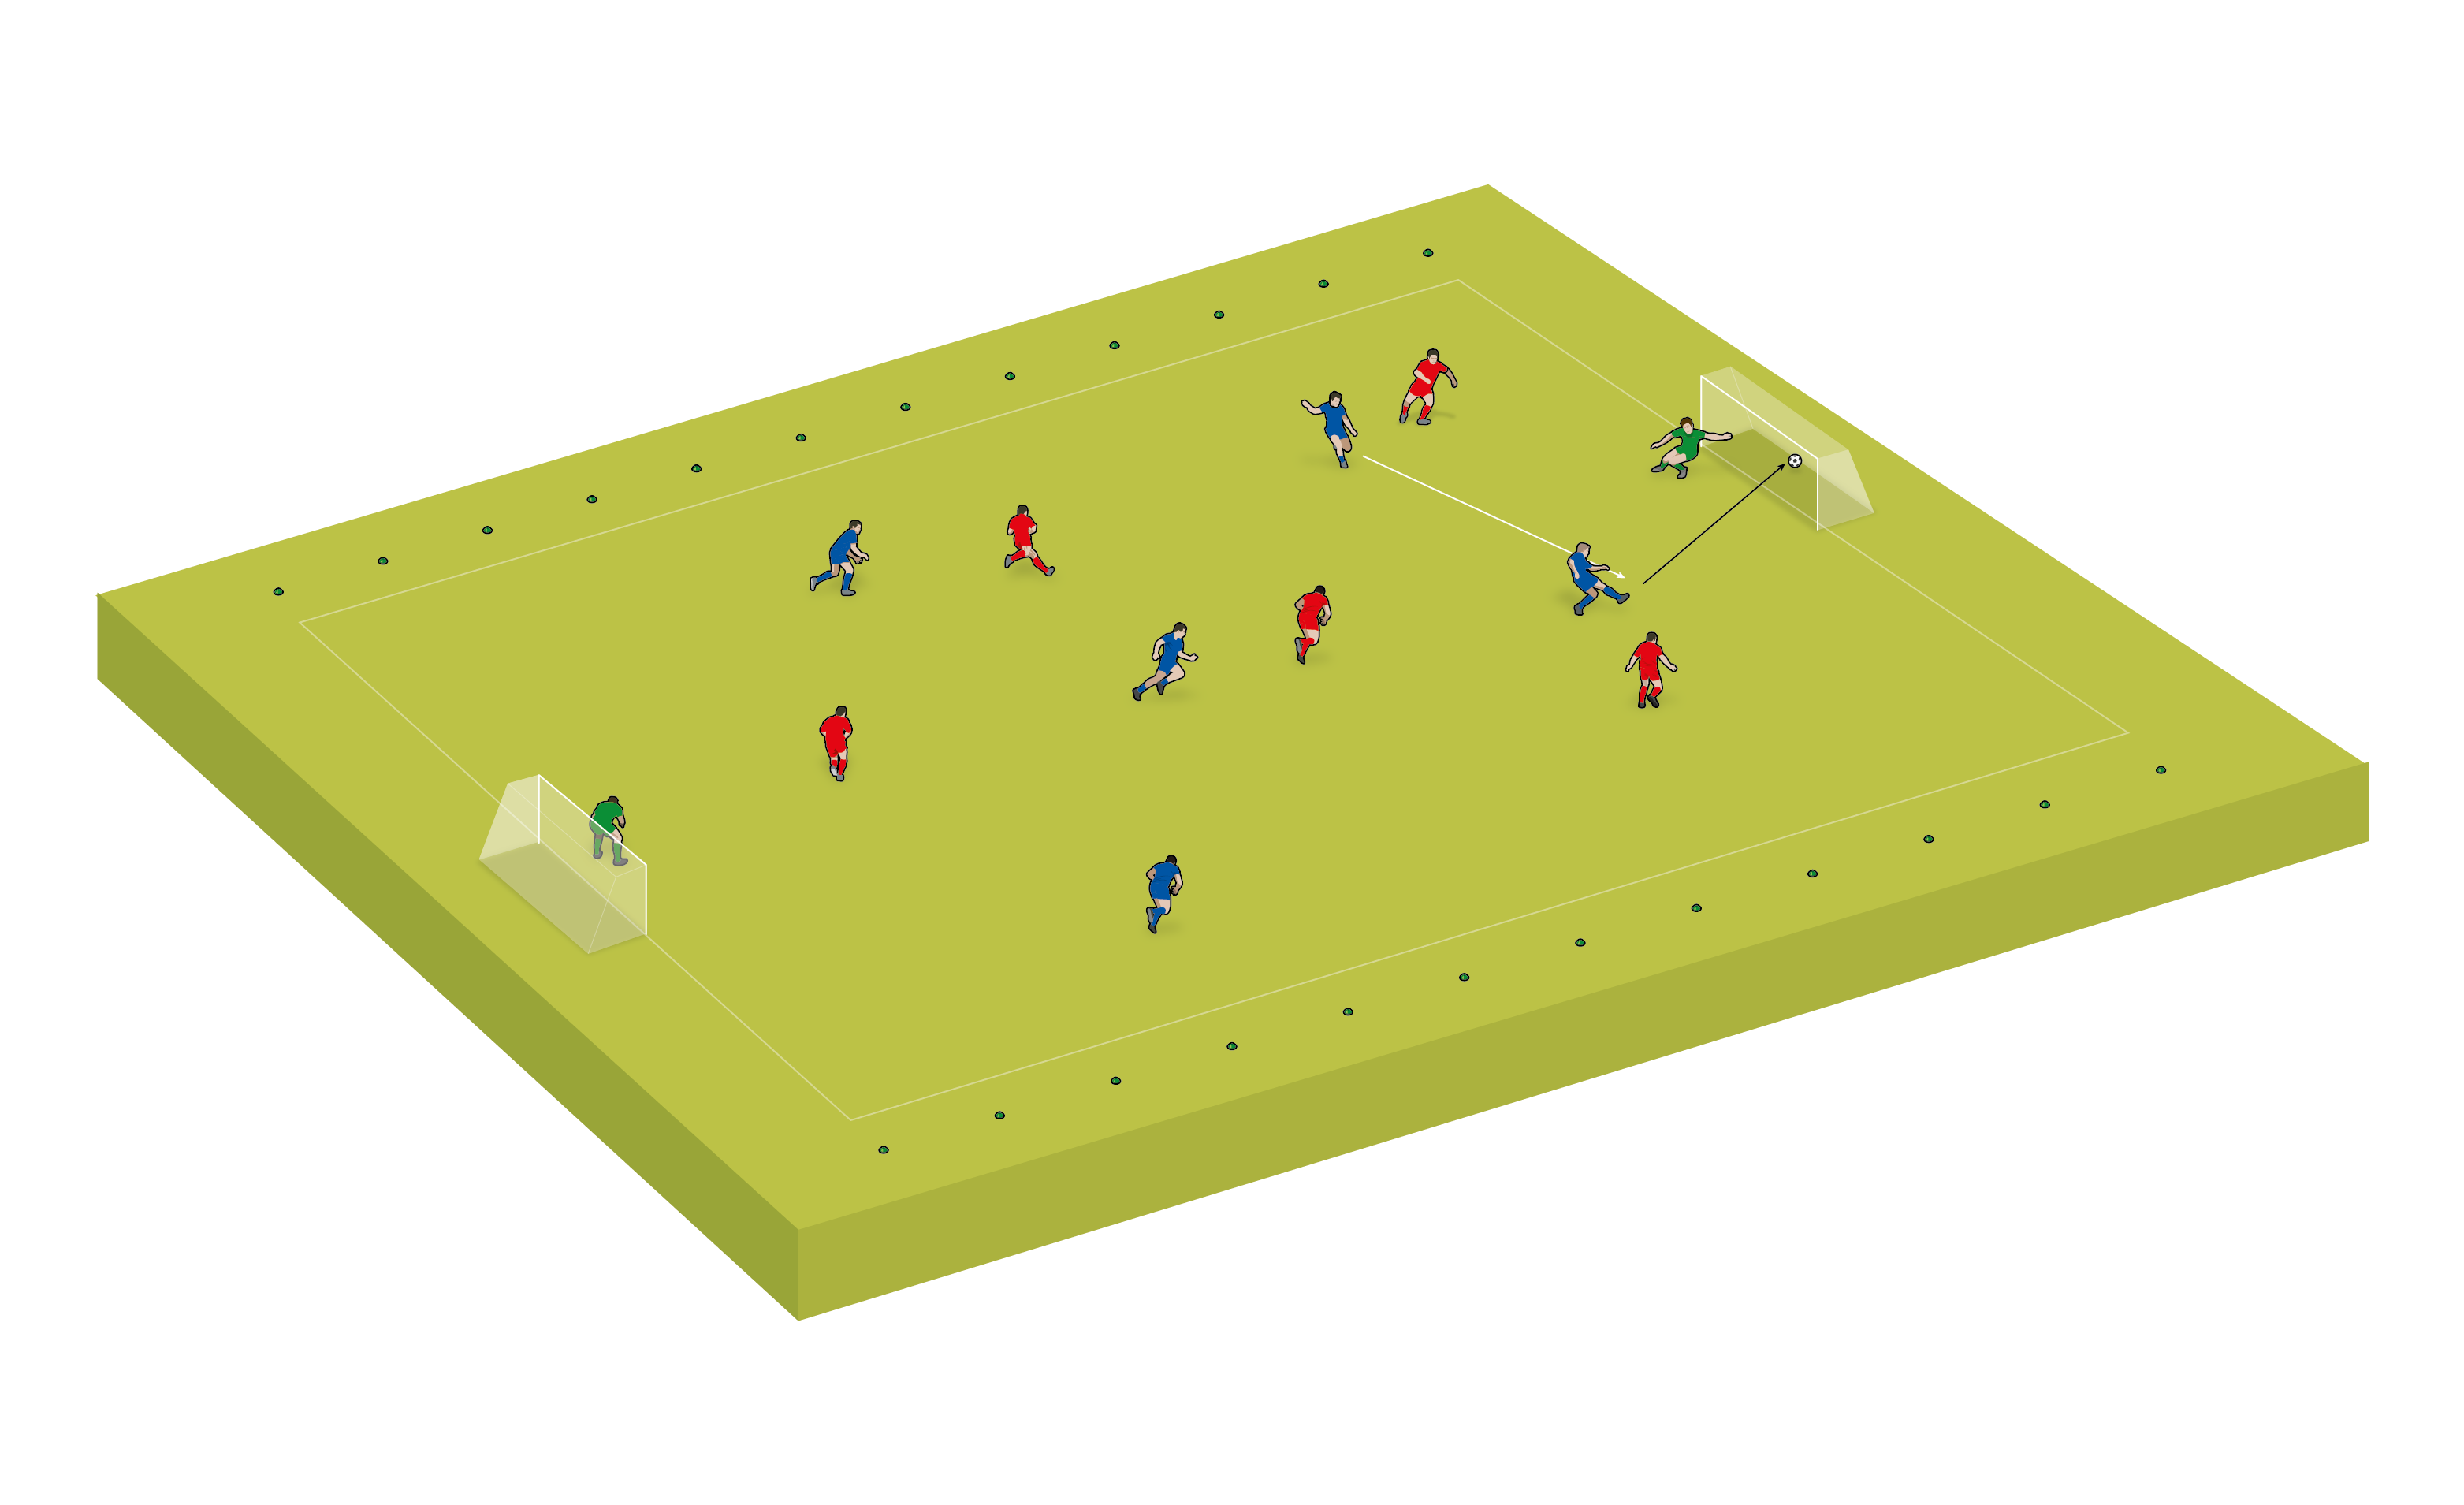 Football/Soccer: Jeu Réduit (Small-Sided Games, Difficult)